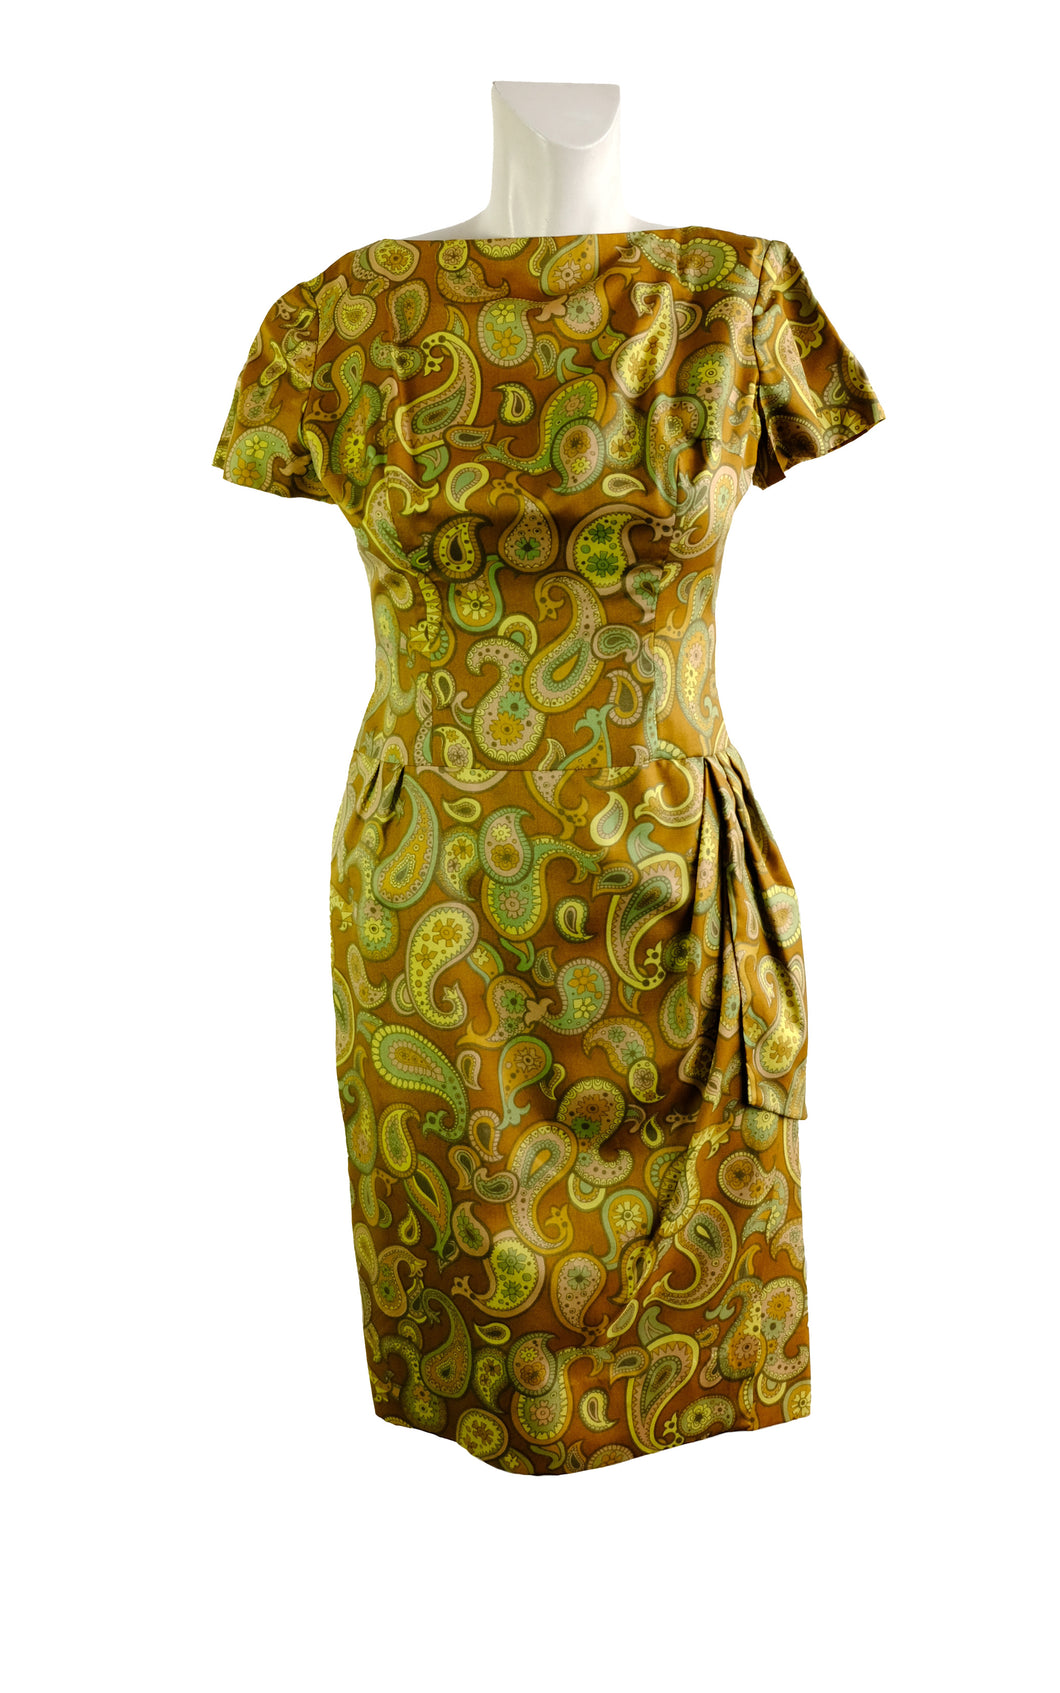 Donald Dunton 1960s Vintage Sheath Dress in Paisley Silk, UK10